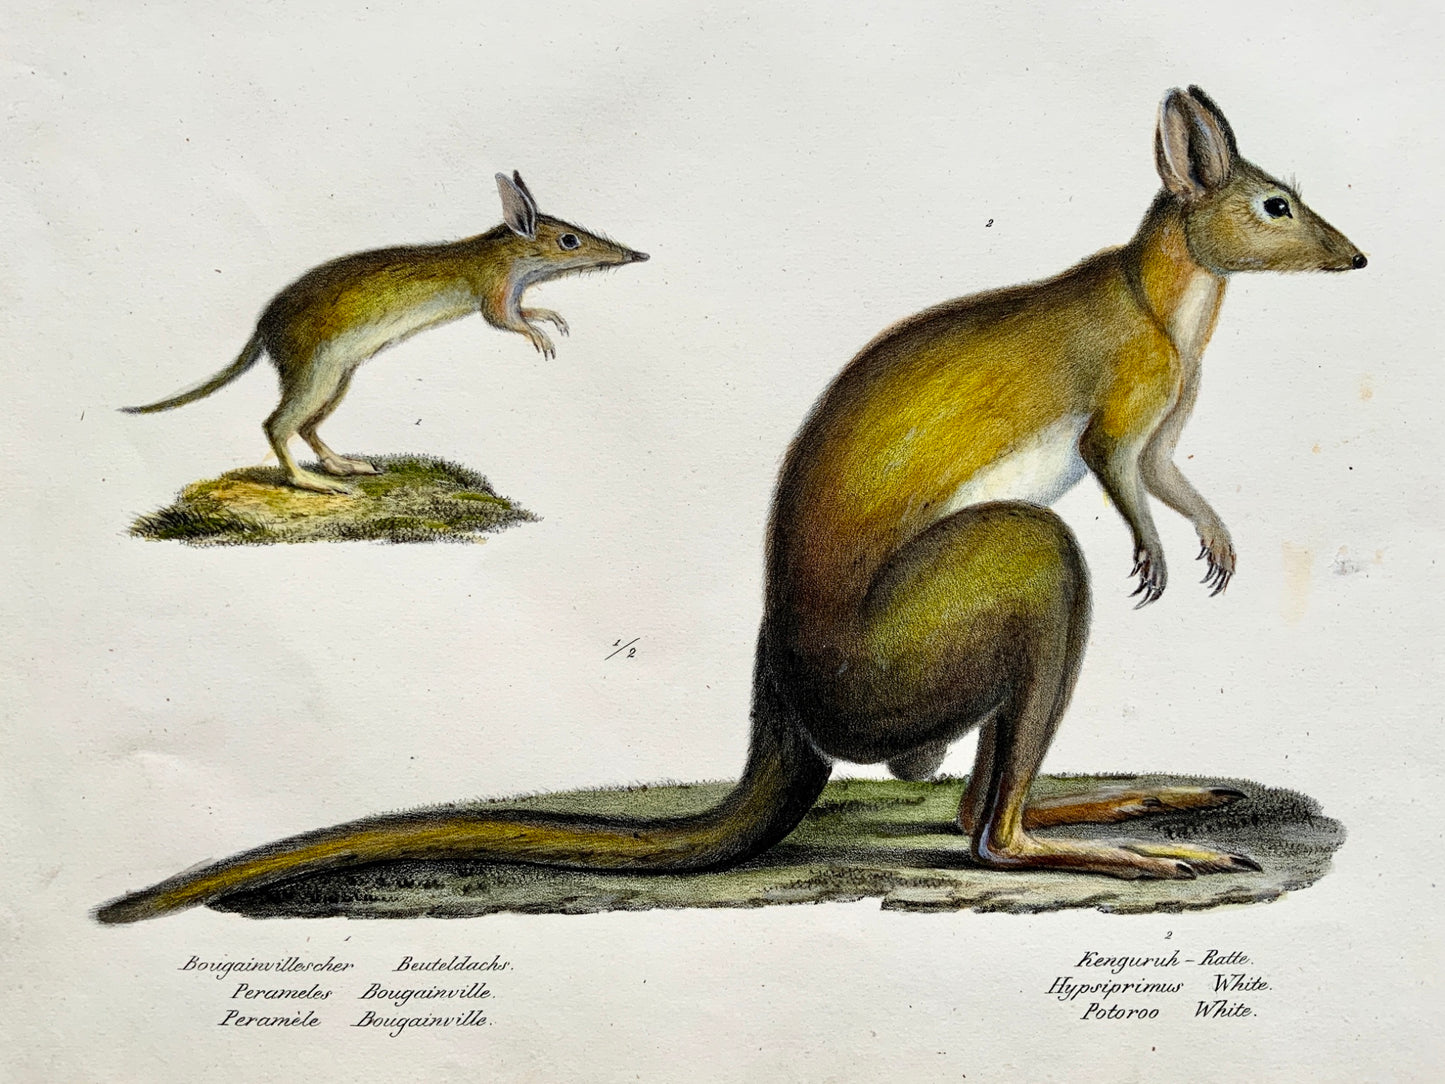 1824 Kangaroo Bandicoot Mammals - K.J. Brodtmann hand colored FOLIO lithograph